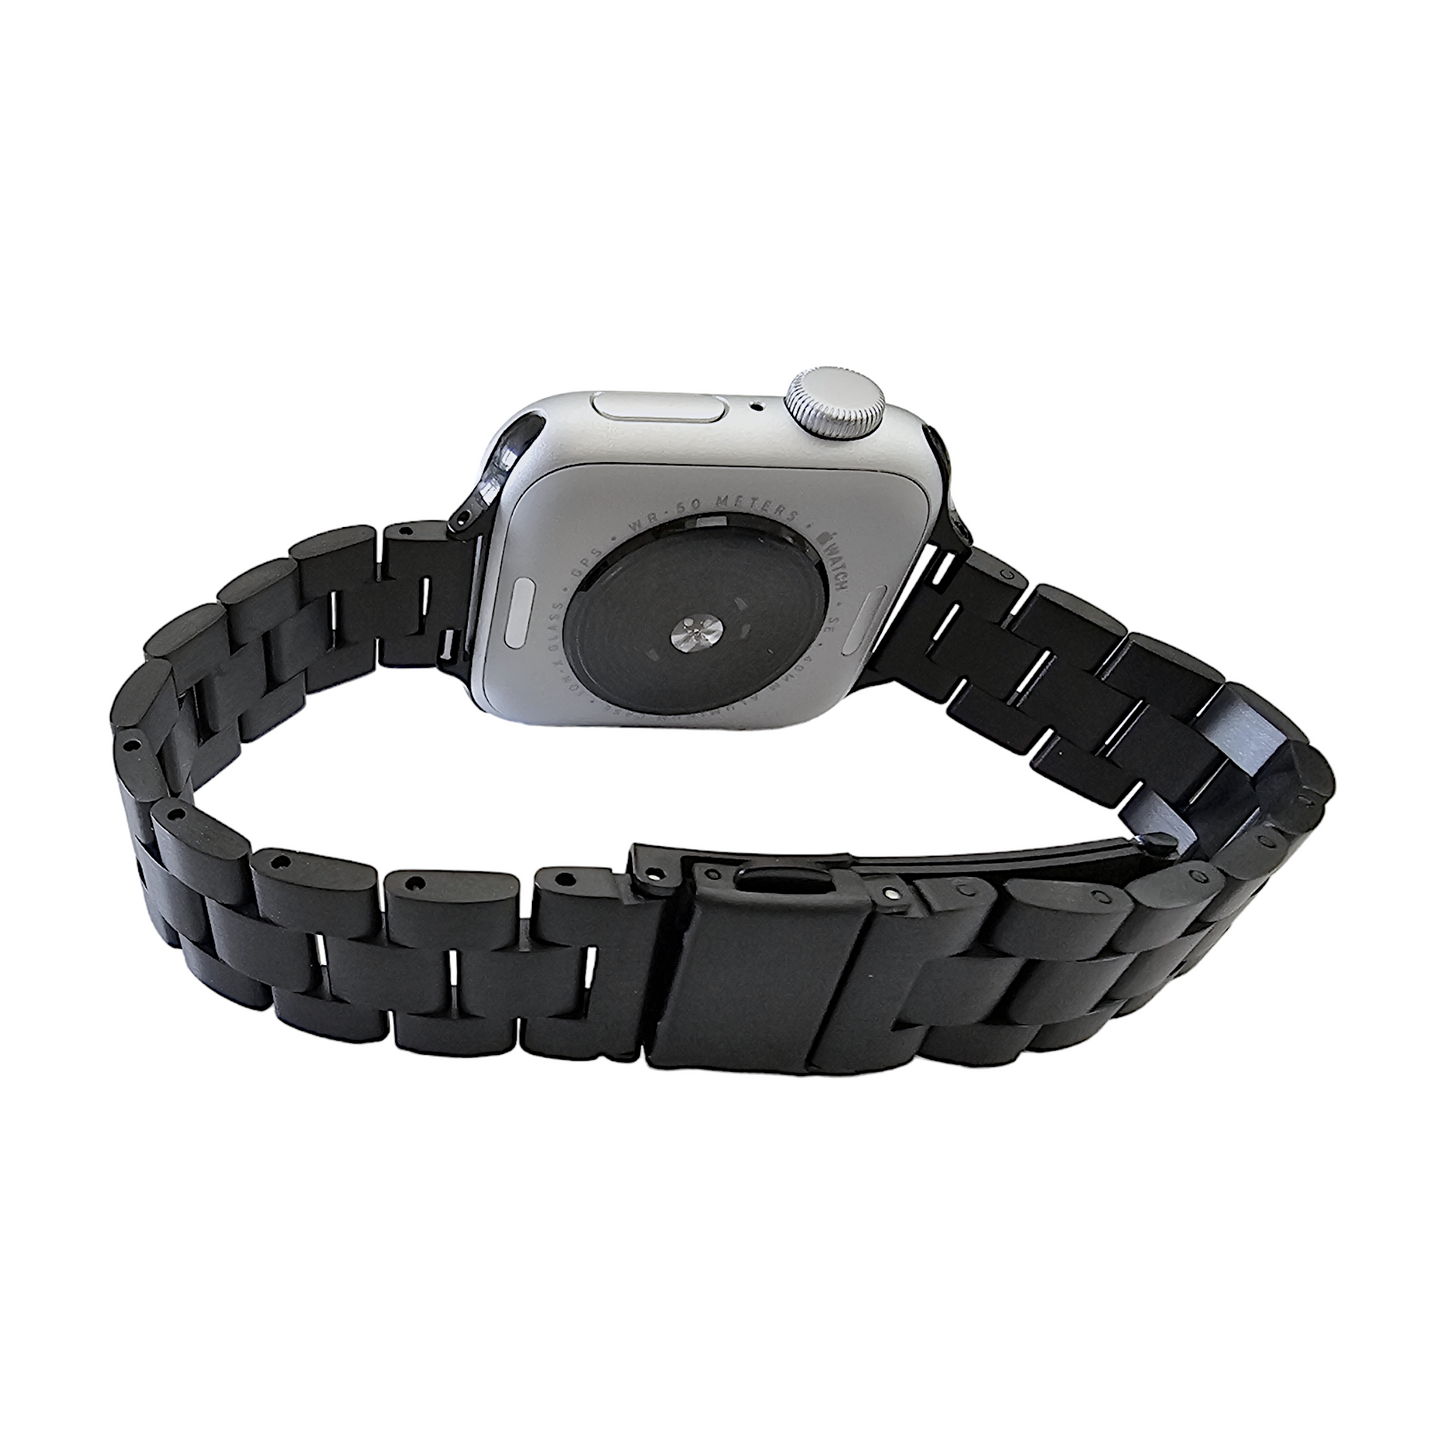 Classic Black slim oyster bracelet for Apple Watch Strap Band